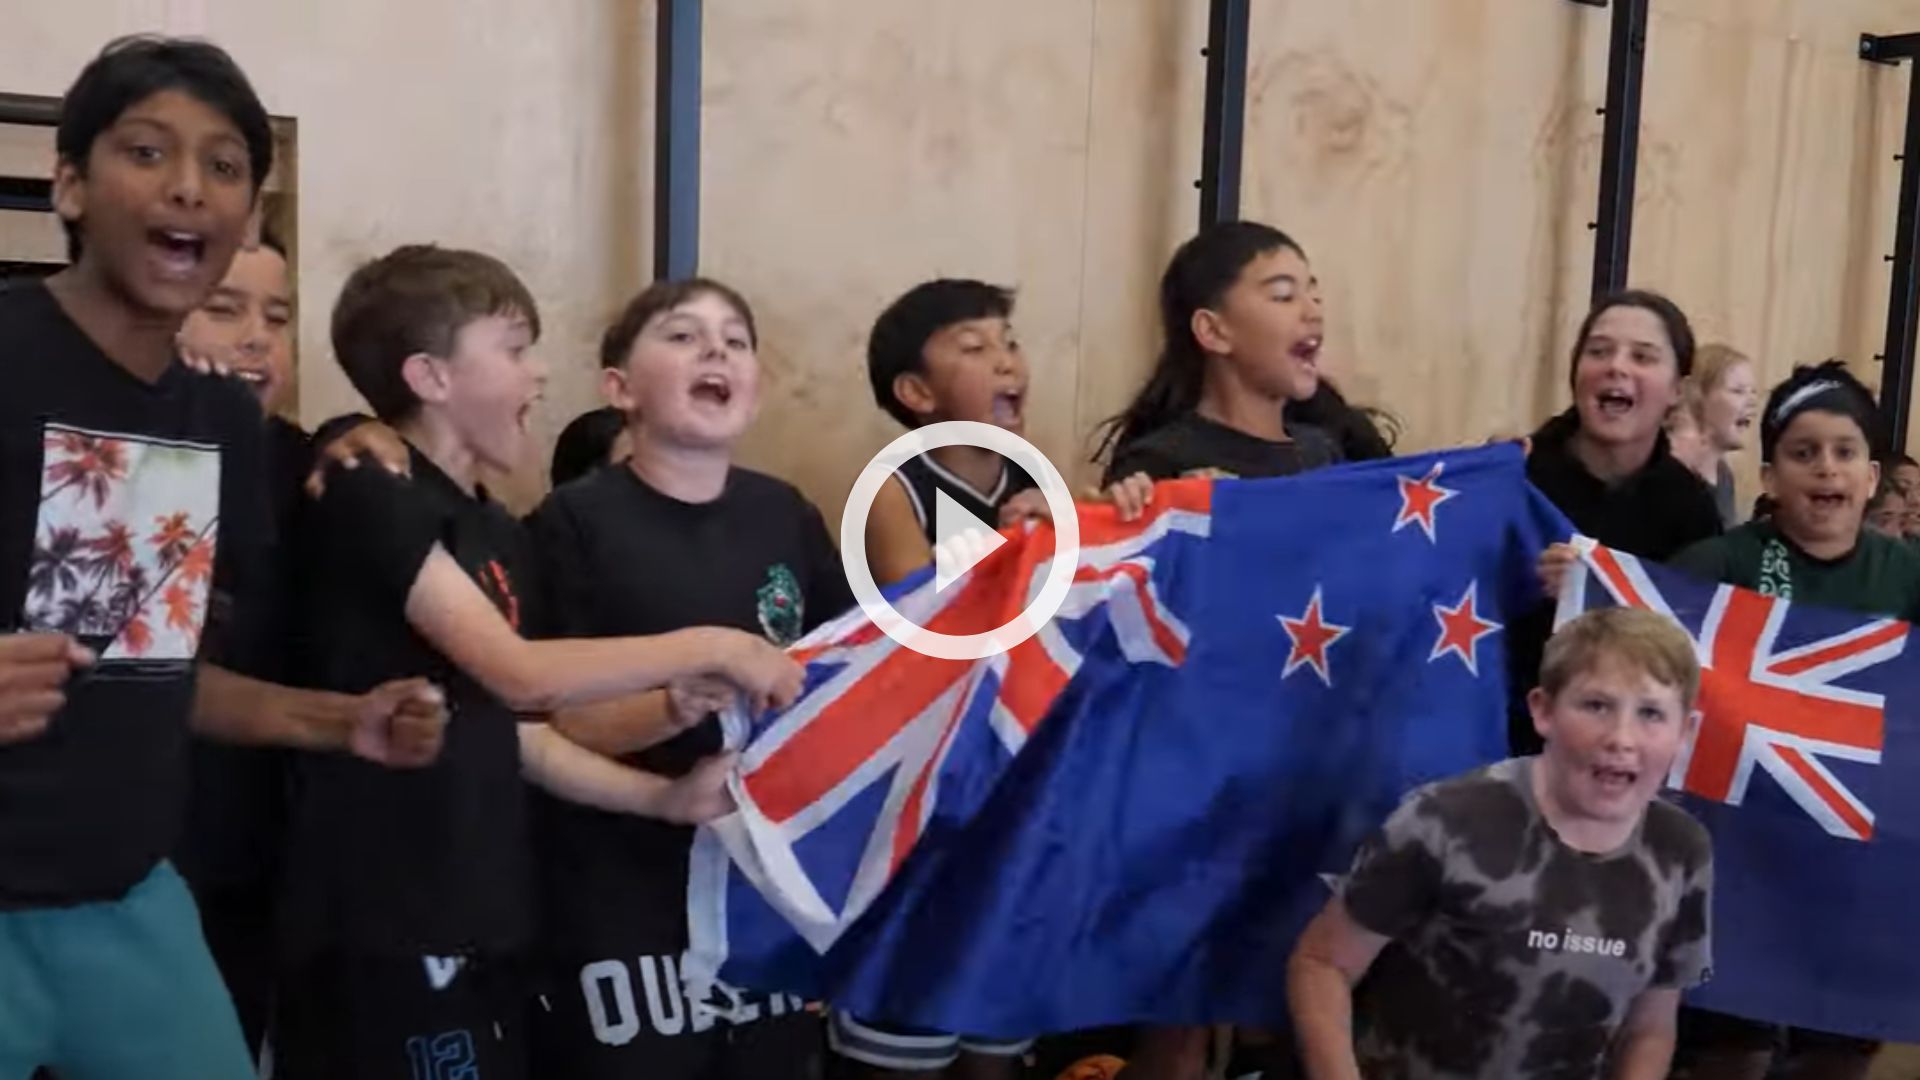 Tamariki holding the New Zealand flag chanting at a sports game